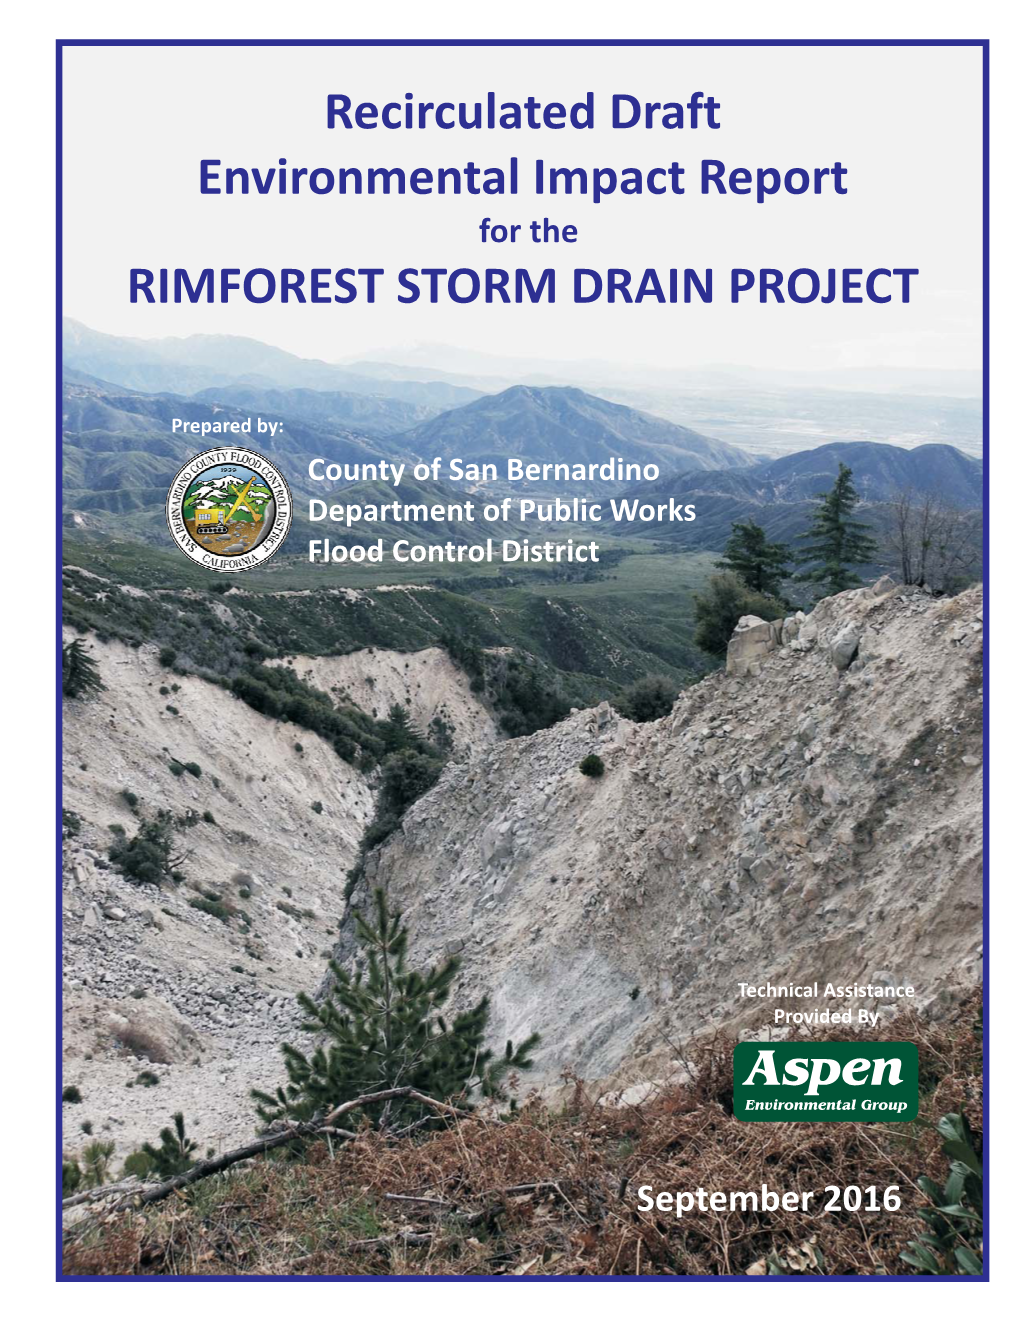 Recirculated Draft Environmental Impact Report RIMFOREST STORM